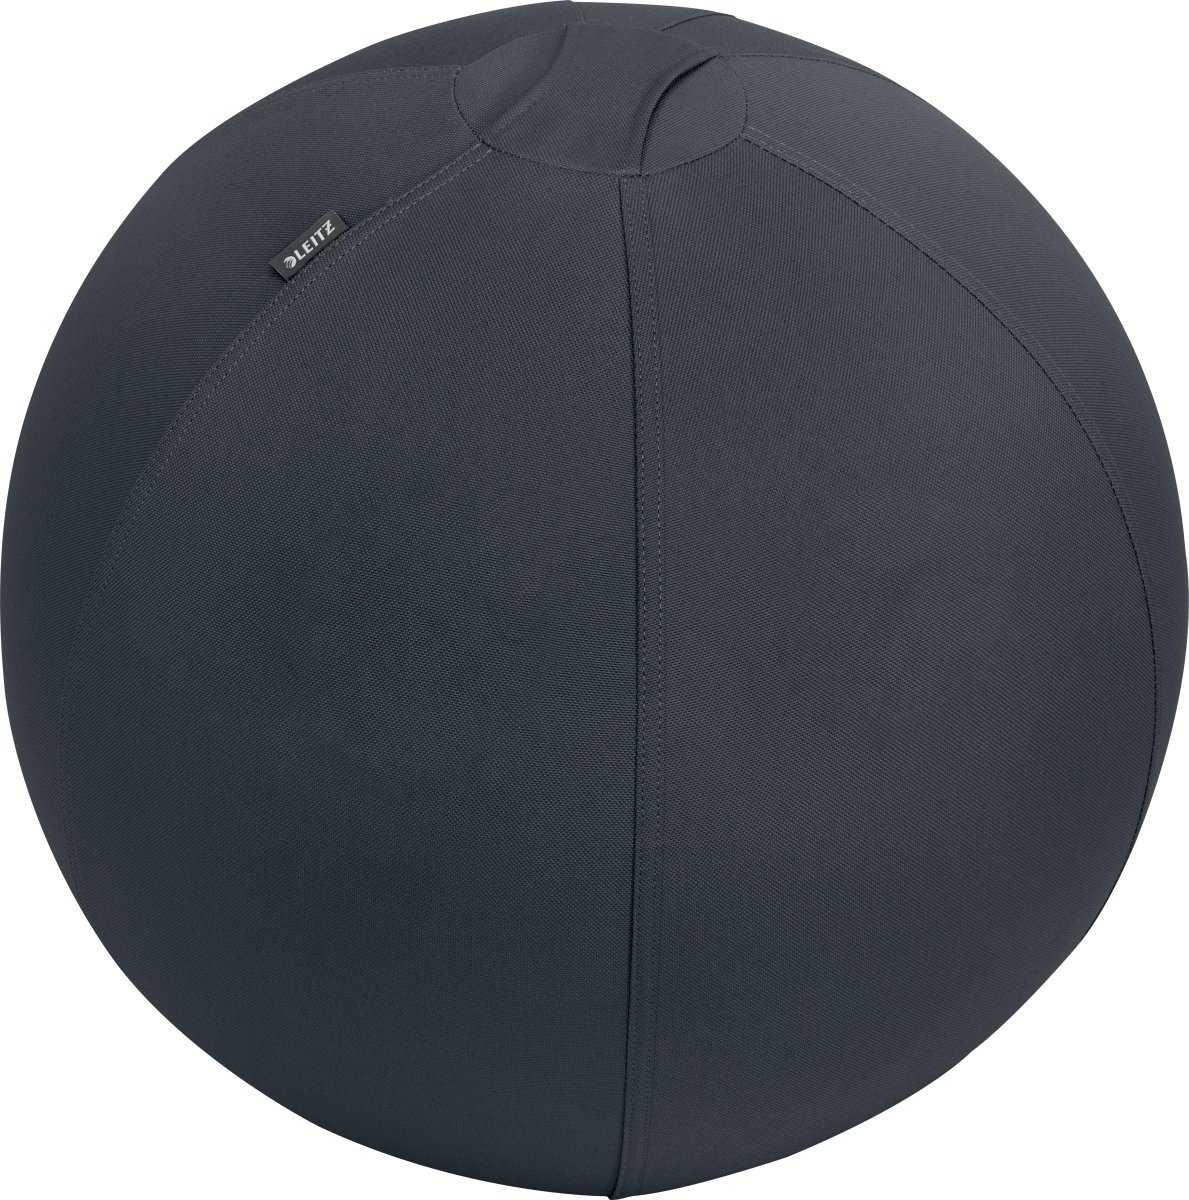 Leitz Ergo Active balansboll, svart, 55 cm